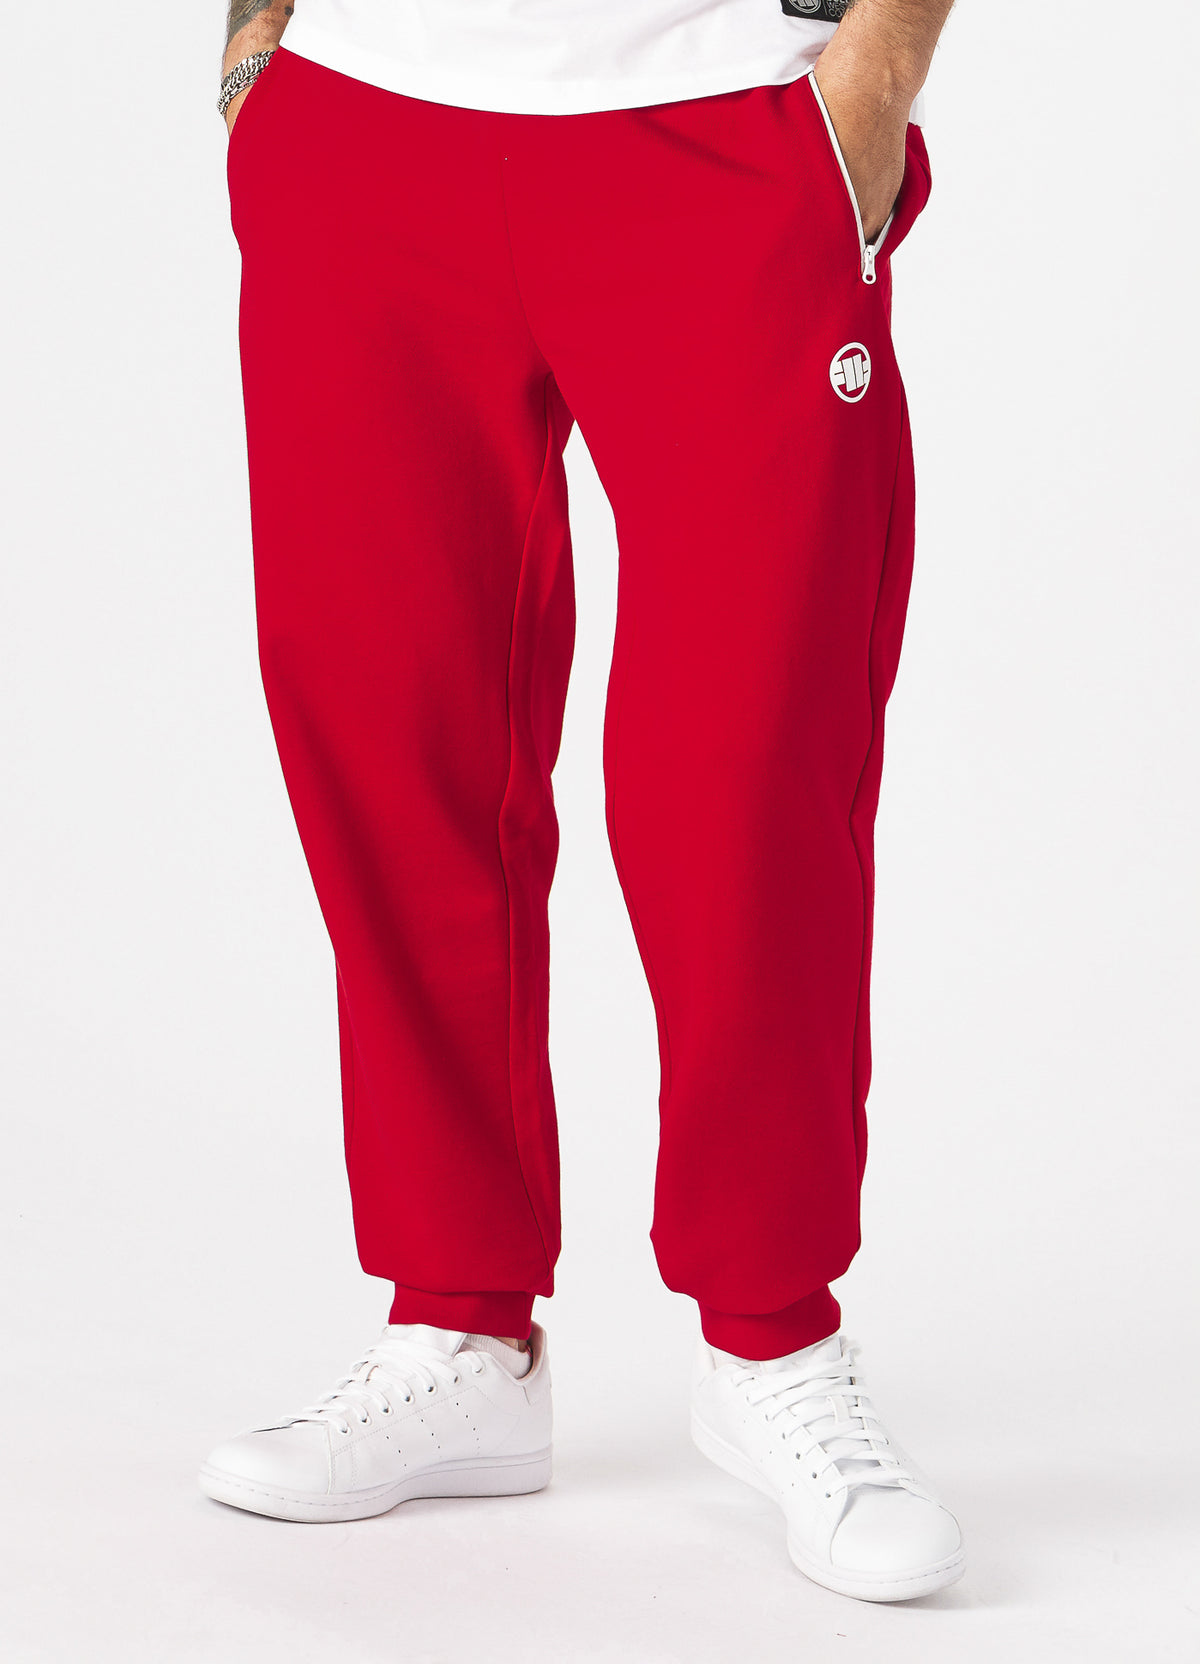 TERRY NEW LOGO Red Track Pants - Pitbull West Coast International Store 